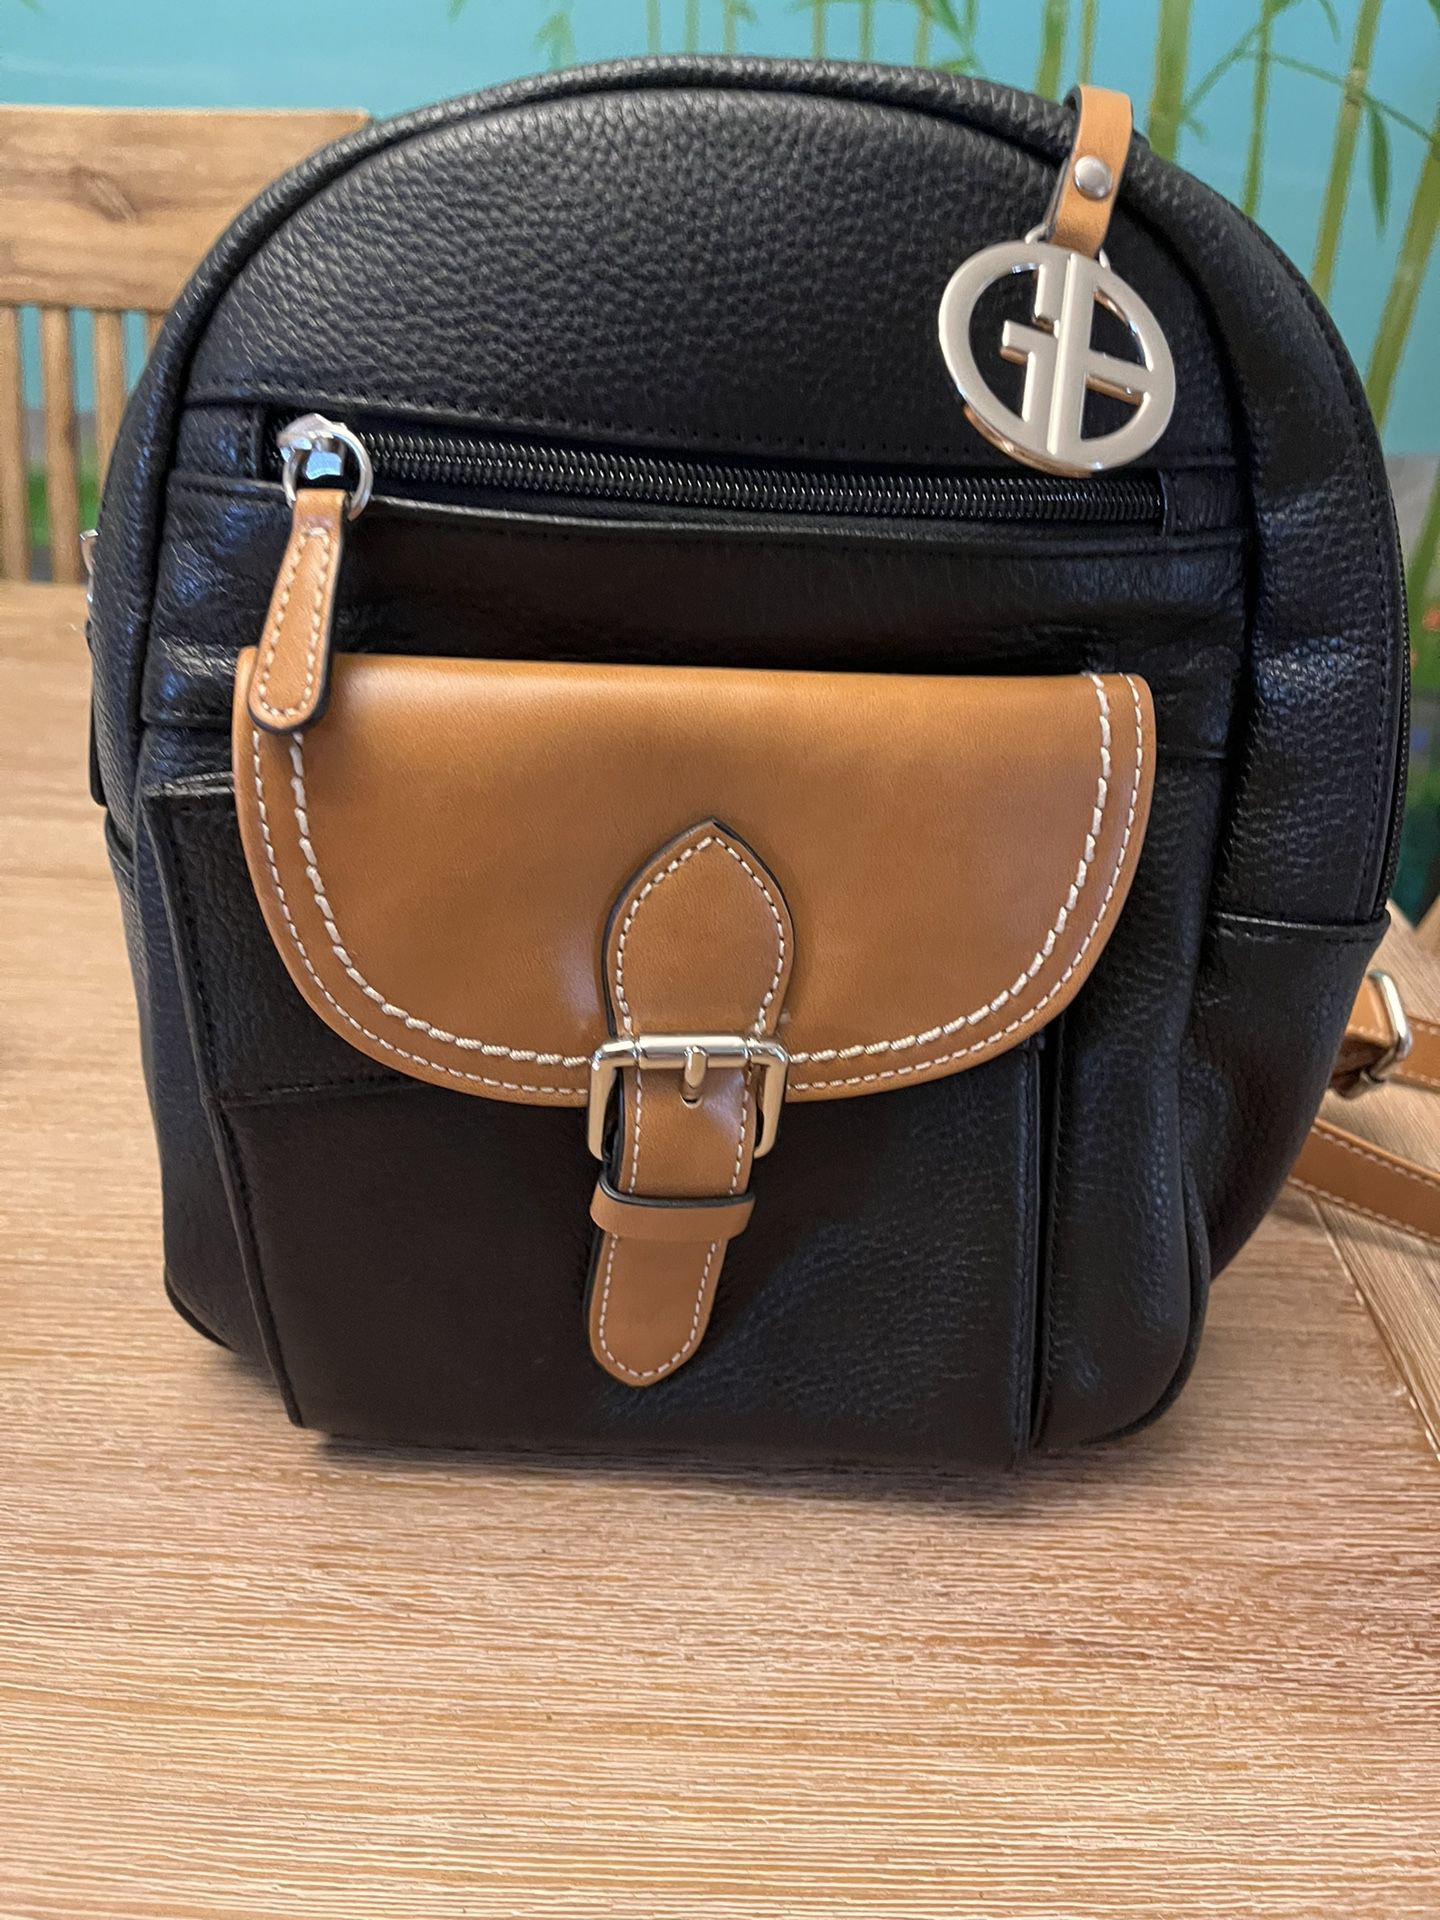 Giani Bernini Leather Backpack Purse